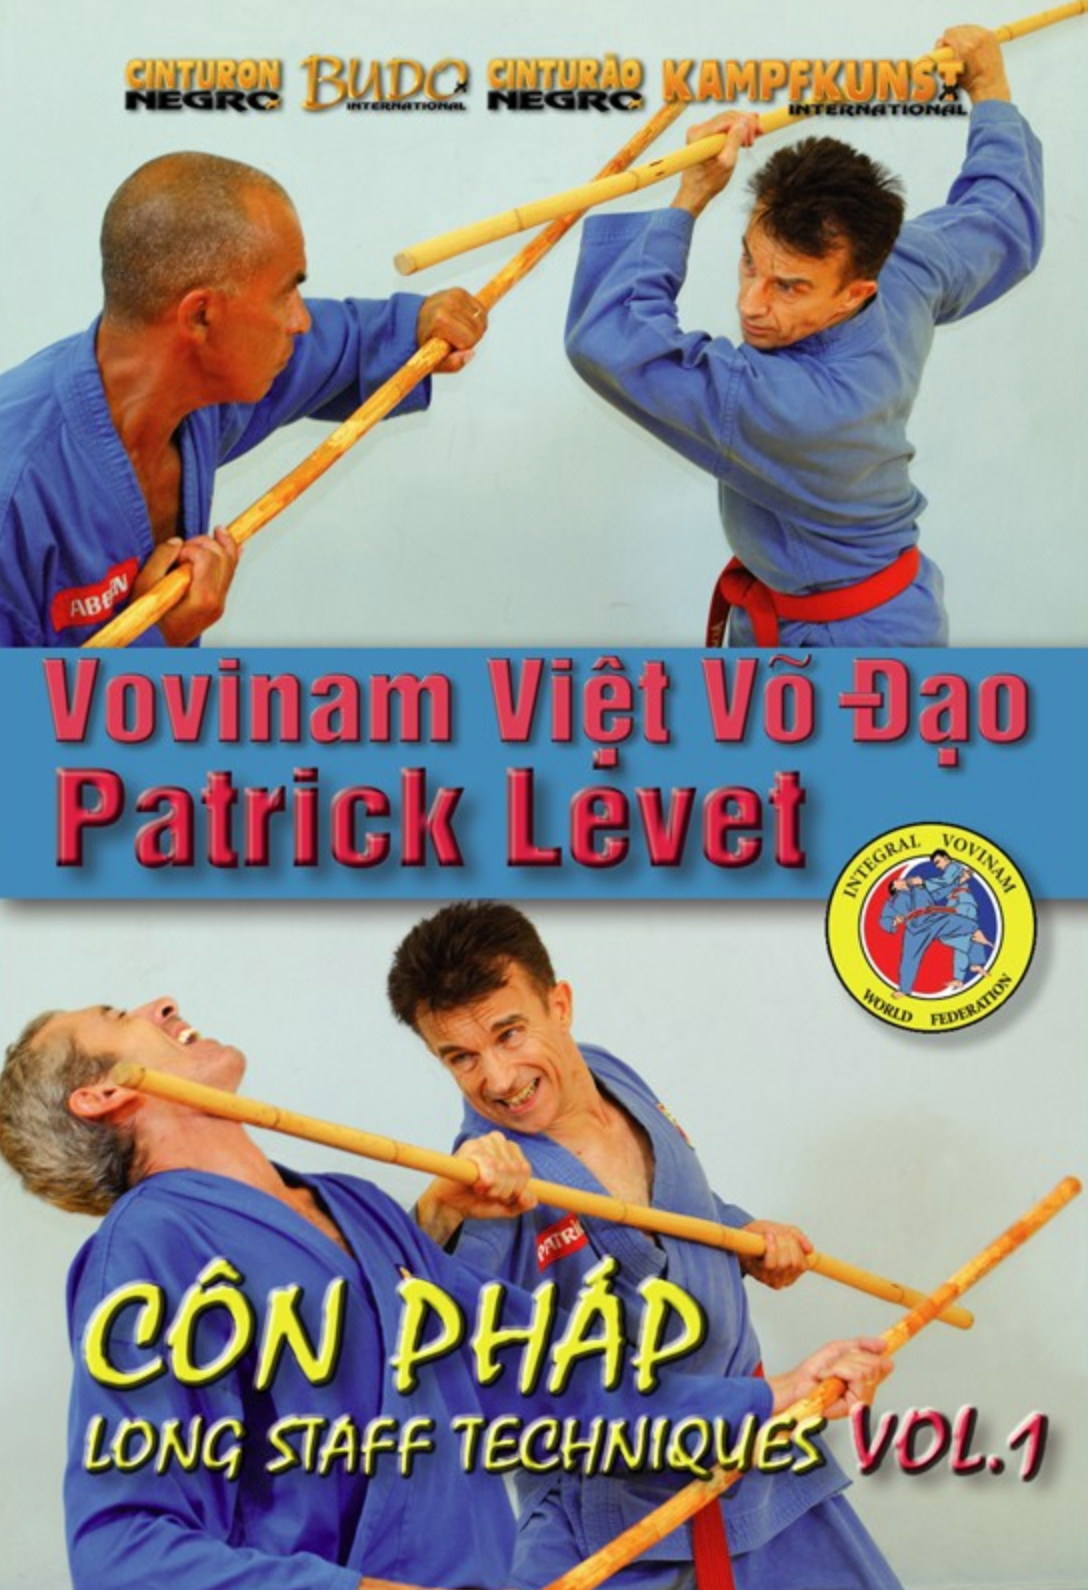 Viet Vo Dao Con Phap. Long staff Vol 1 DVD with Patrick Levet - Budovideos Inc